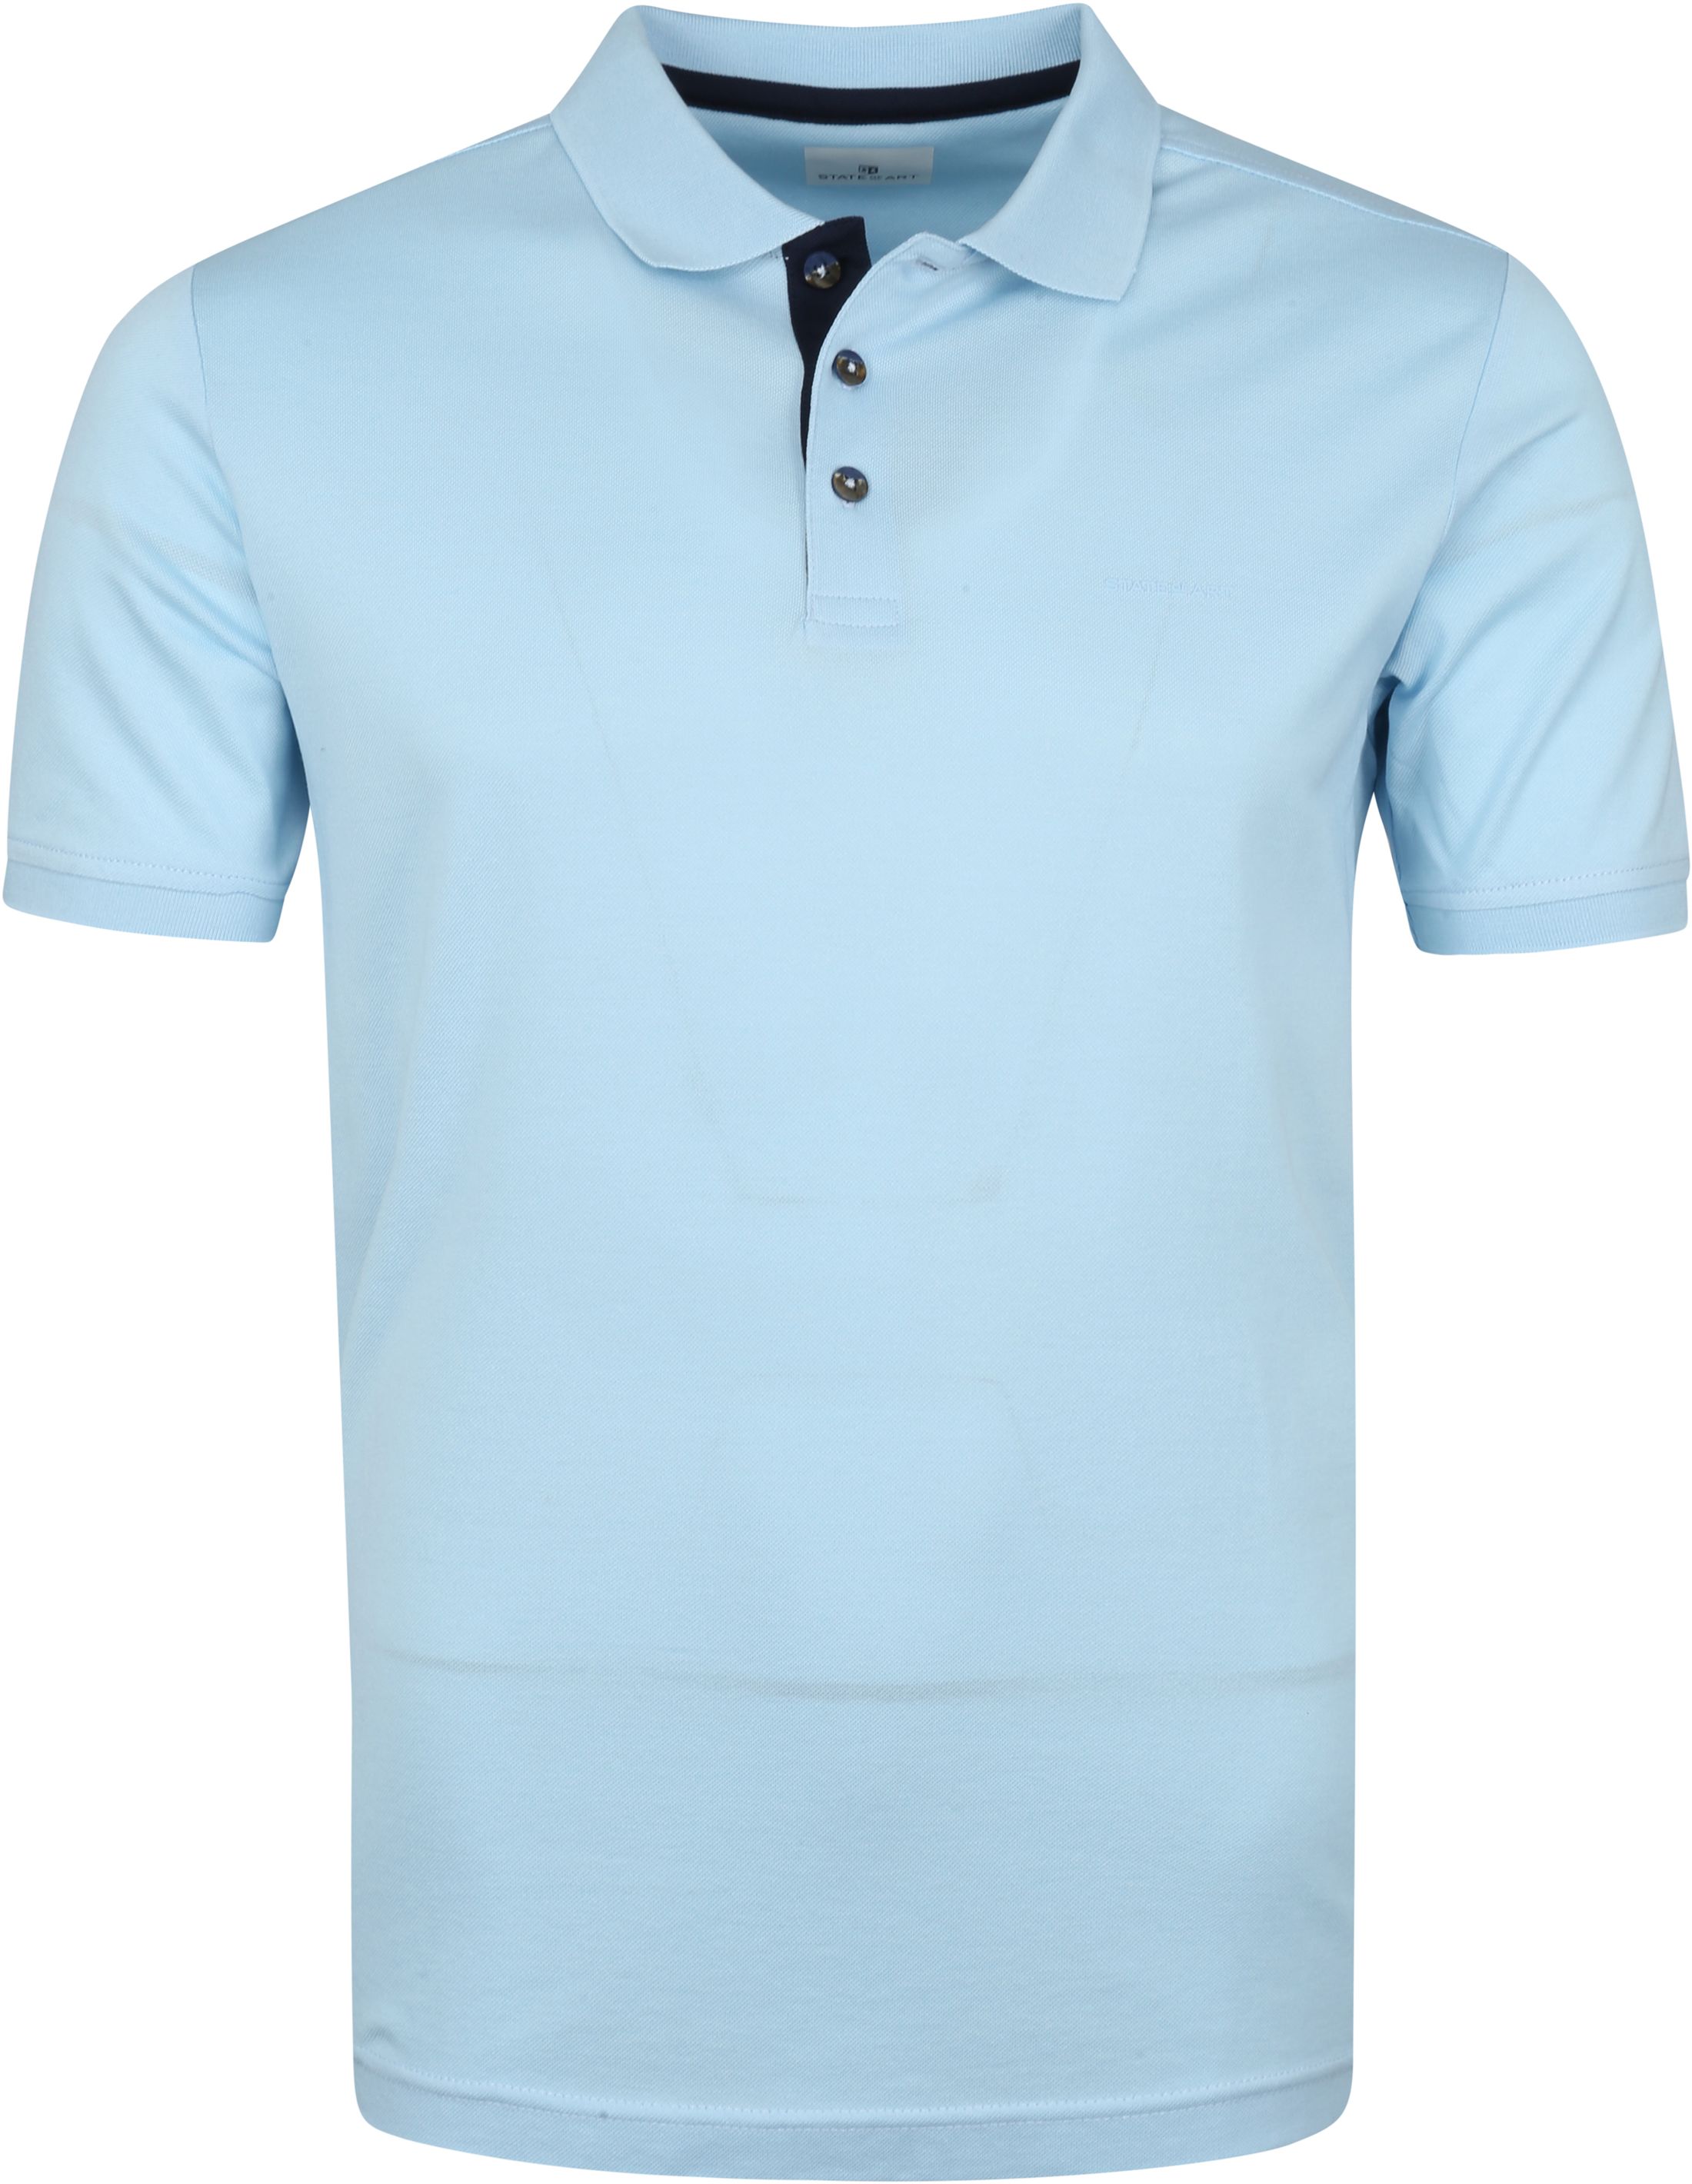 State Of Art Mercerized Pique Polo Shirt Blue size 3XL